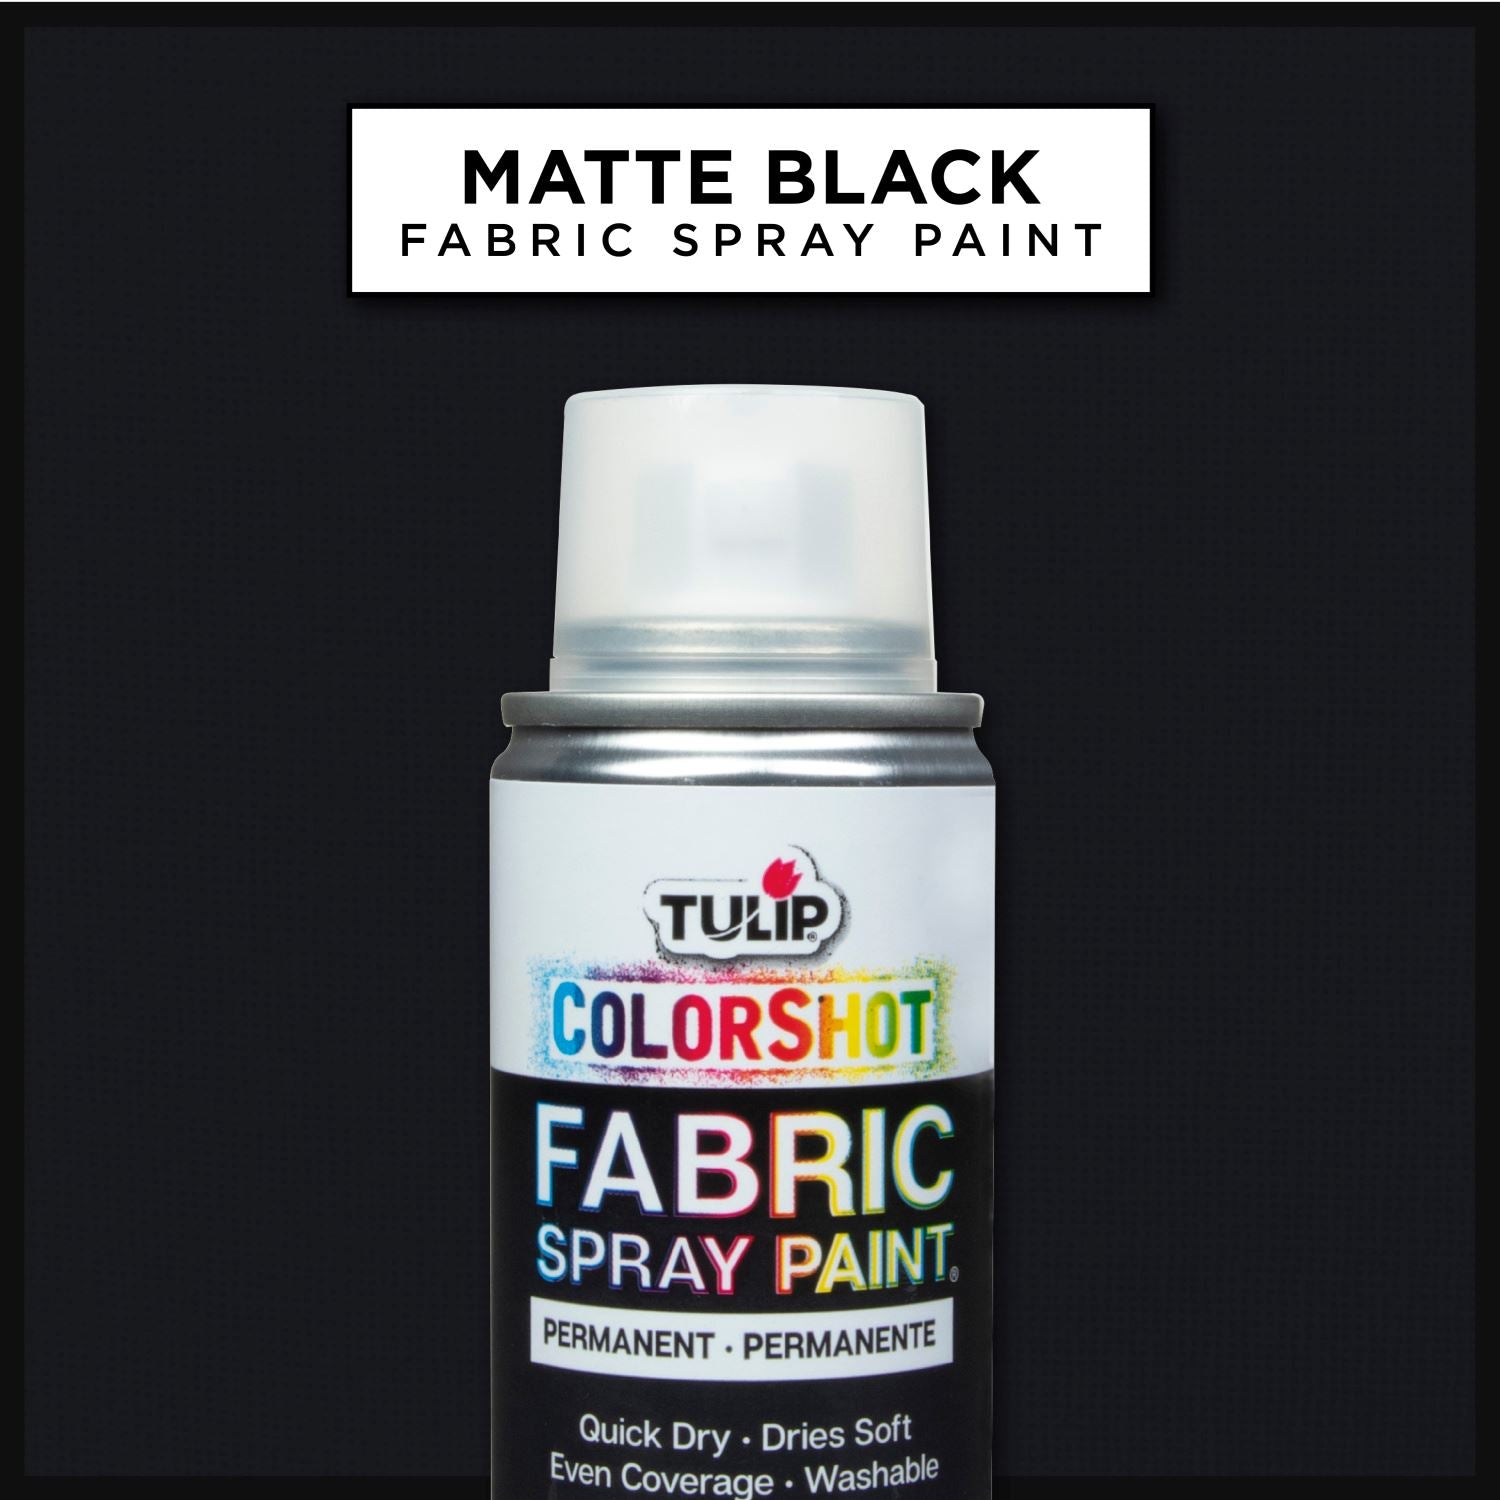 Tulip Color Shot Instant Fabric Paint Color Spray 3 oz Gray